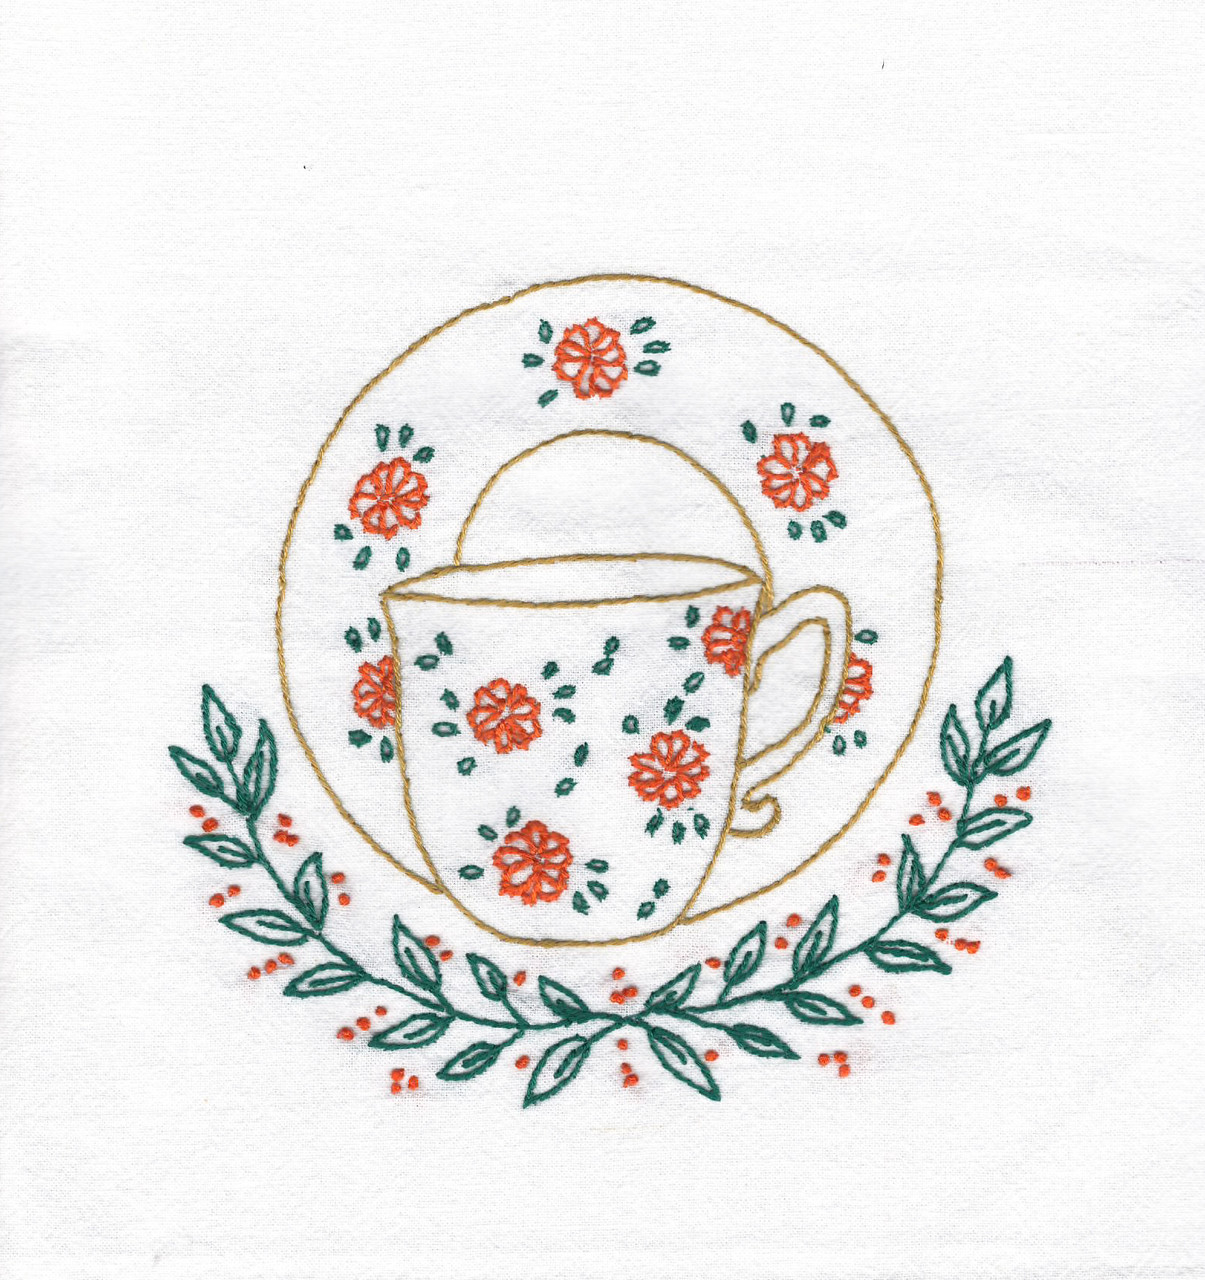 Tea Cup Machine Embroidery Design, Sketch Machine Embroidery Mug, Art  Embroidery Floral Tea Cup, Easy Stitch, Instant Download Design. 